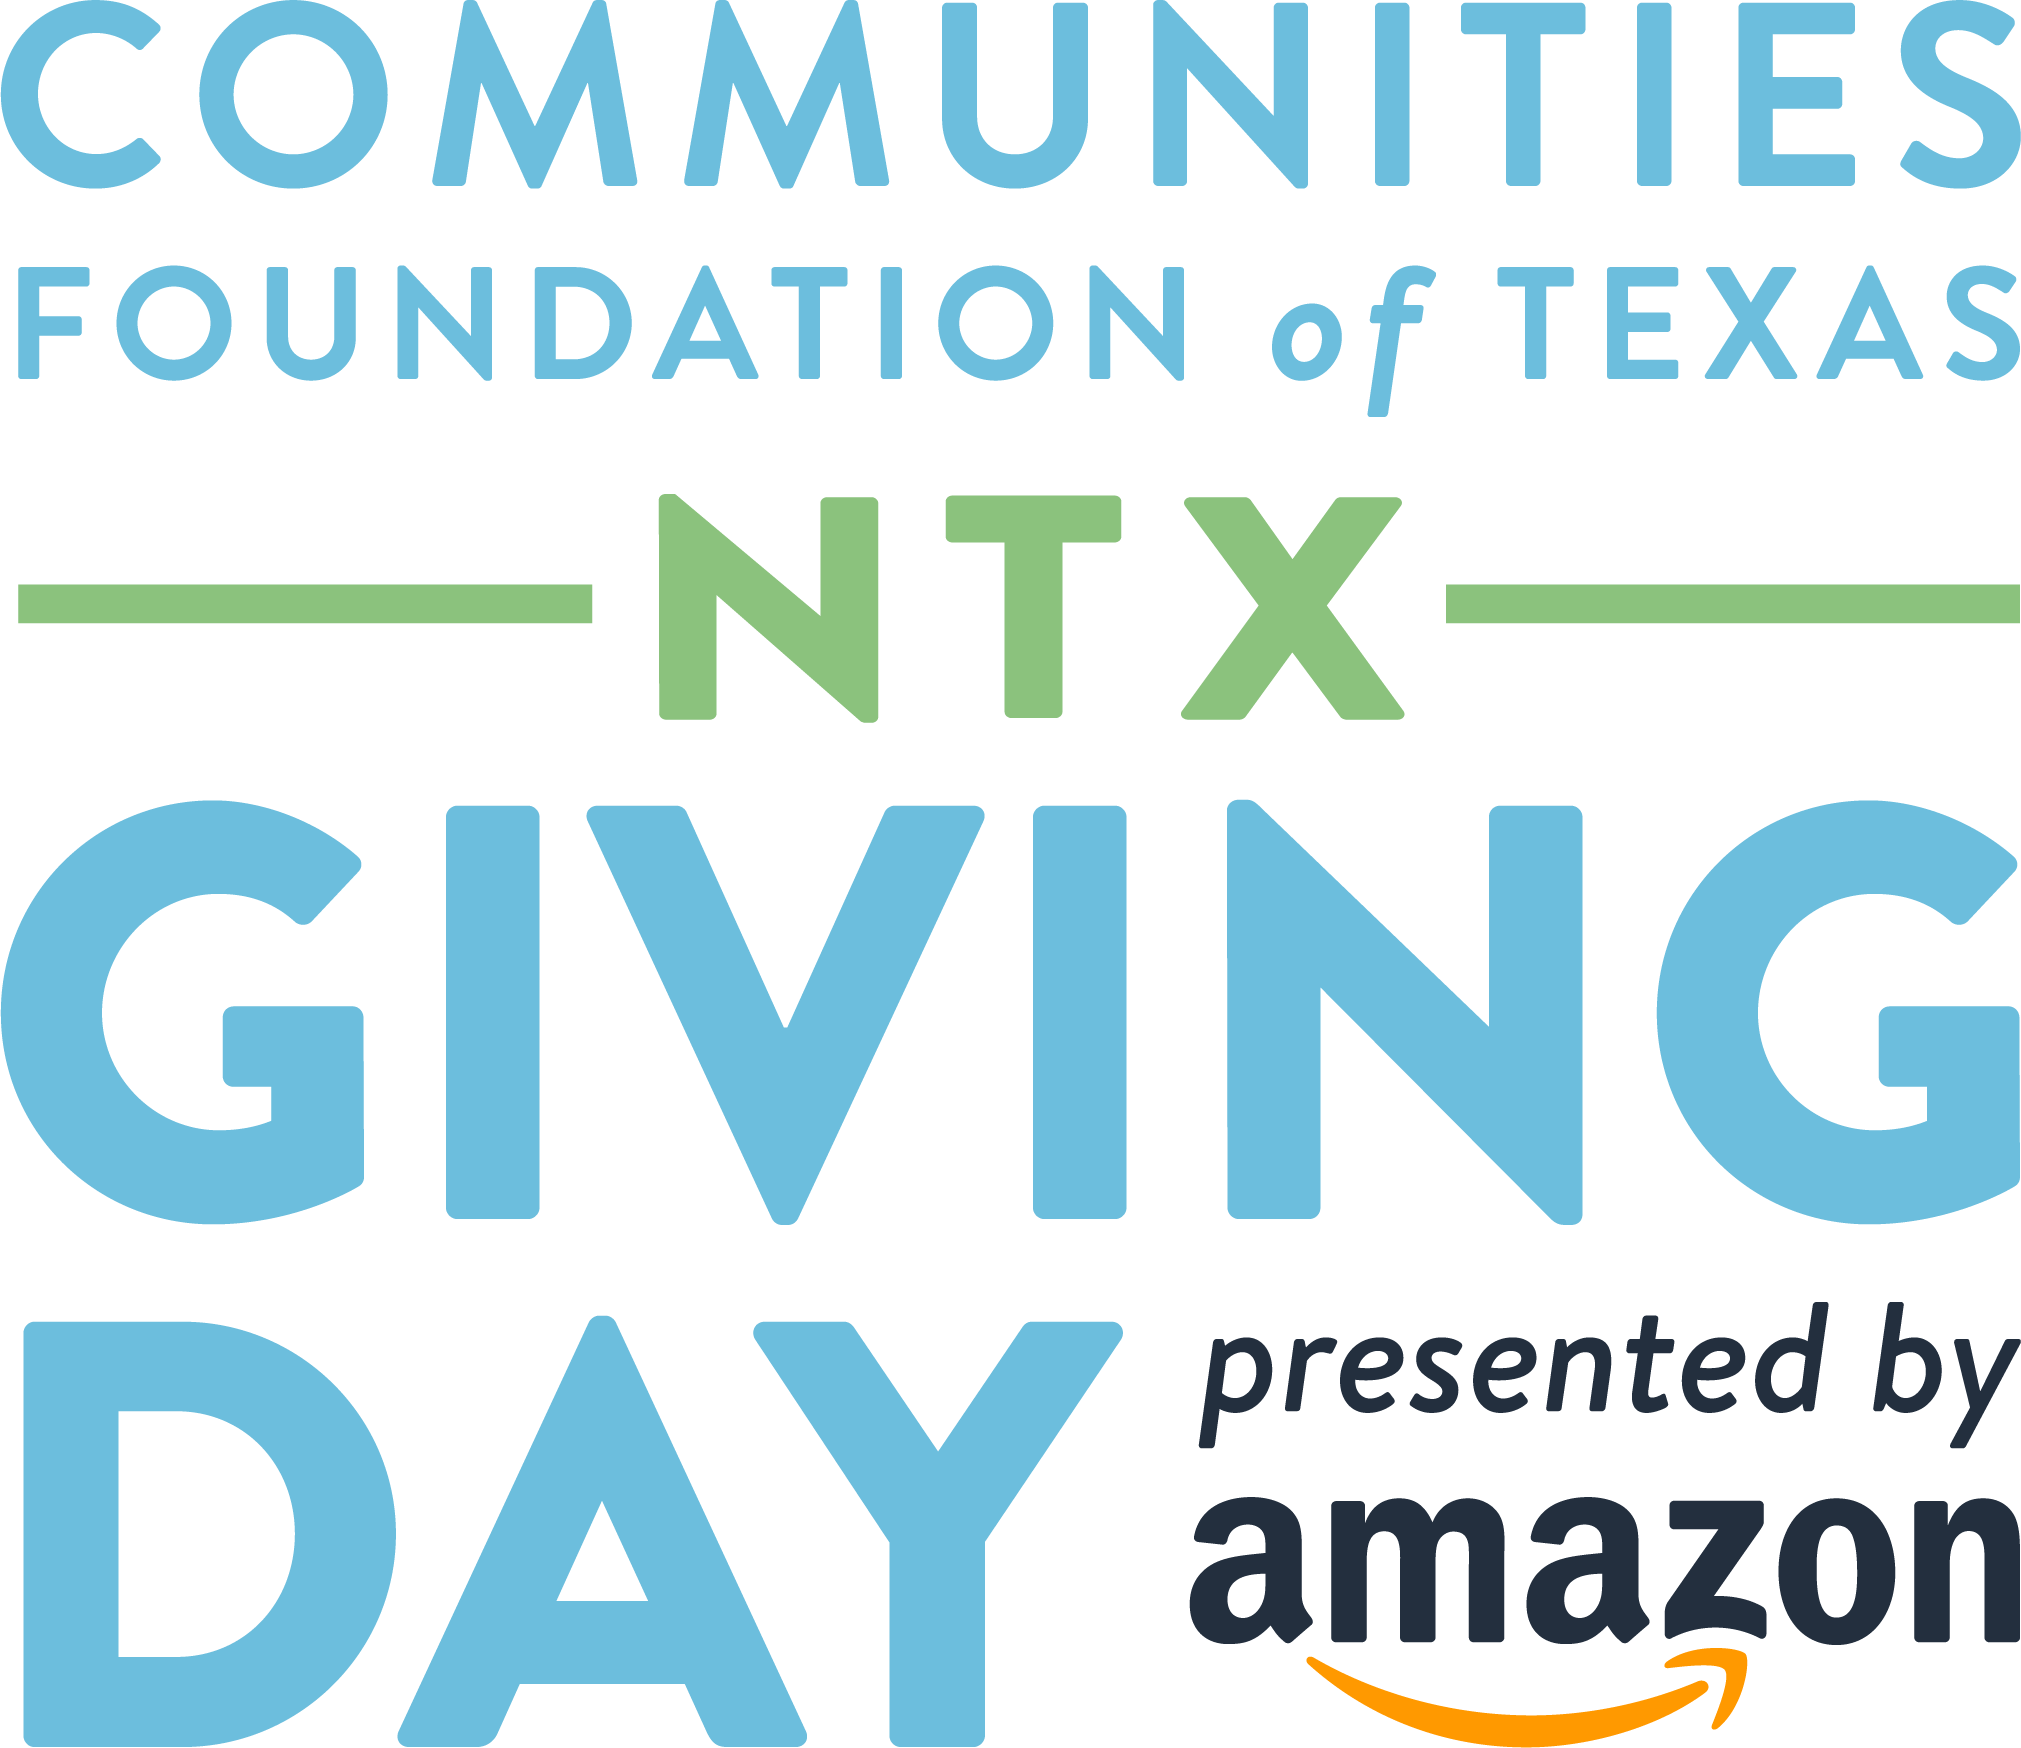 North Texas Giving Day logo